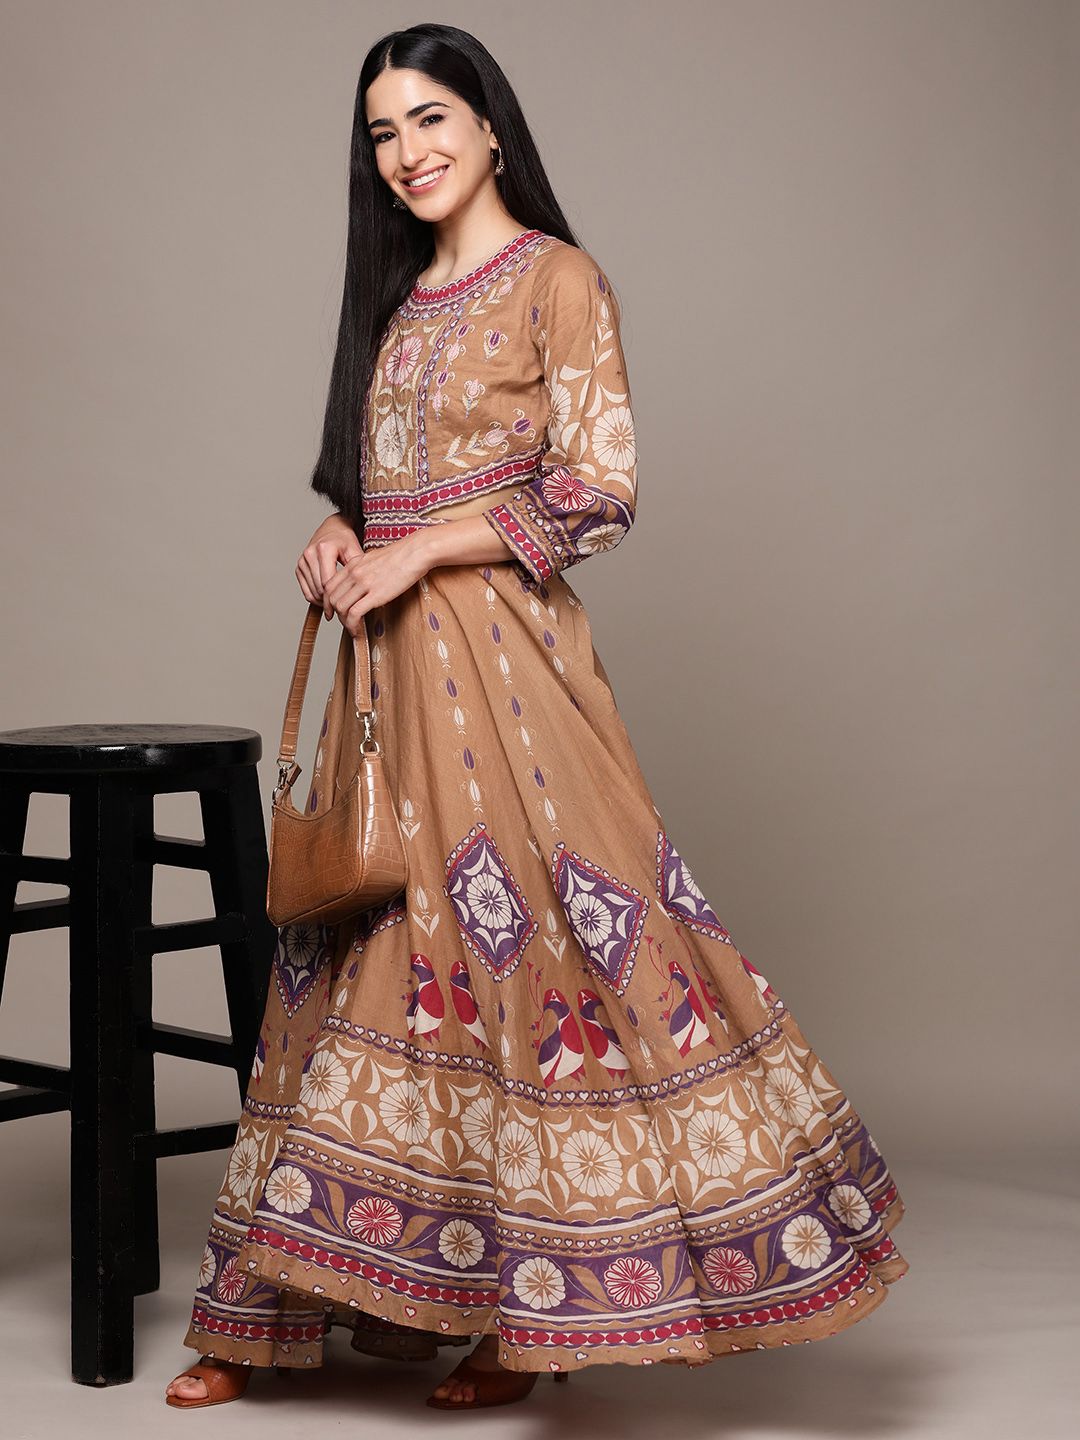 Ritu Kumar Ethnic Motifs Embroidered Ethnic A-Line Maxi Dress Price in India